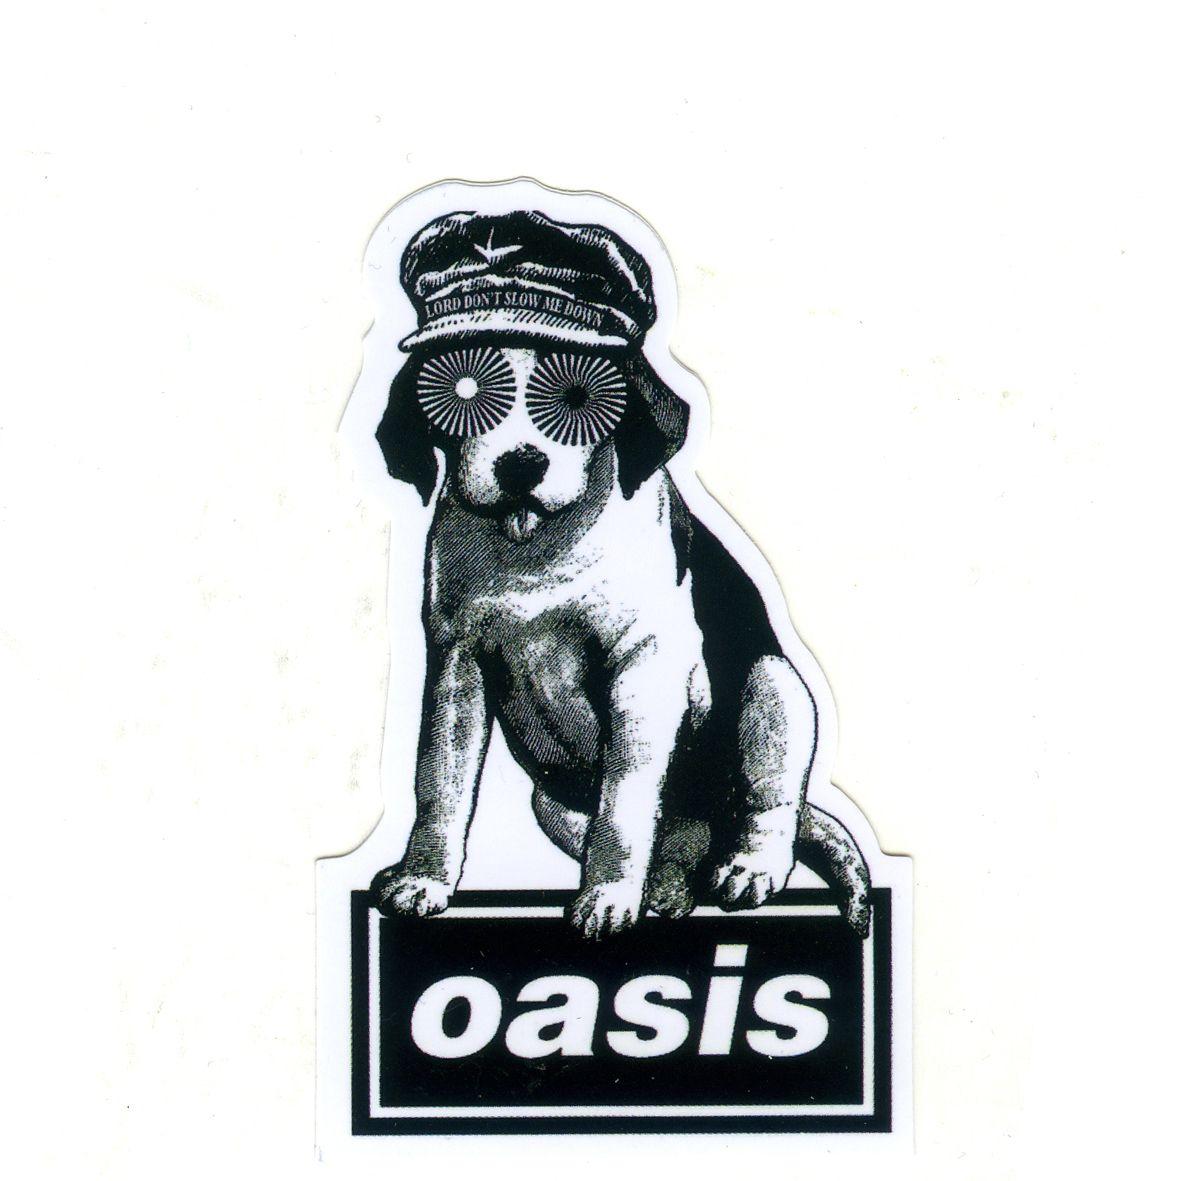 English Rock Band Logo - 1699 OASIS English Rock Band Logo, Height 8 cm decal sticker ...